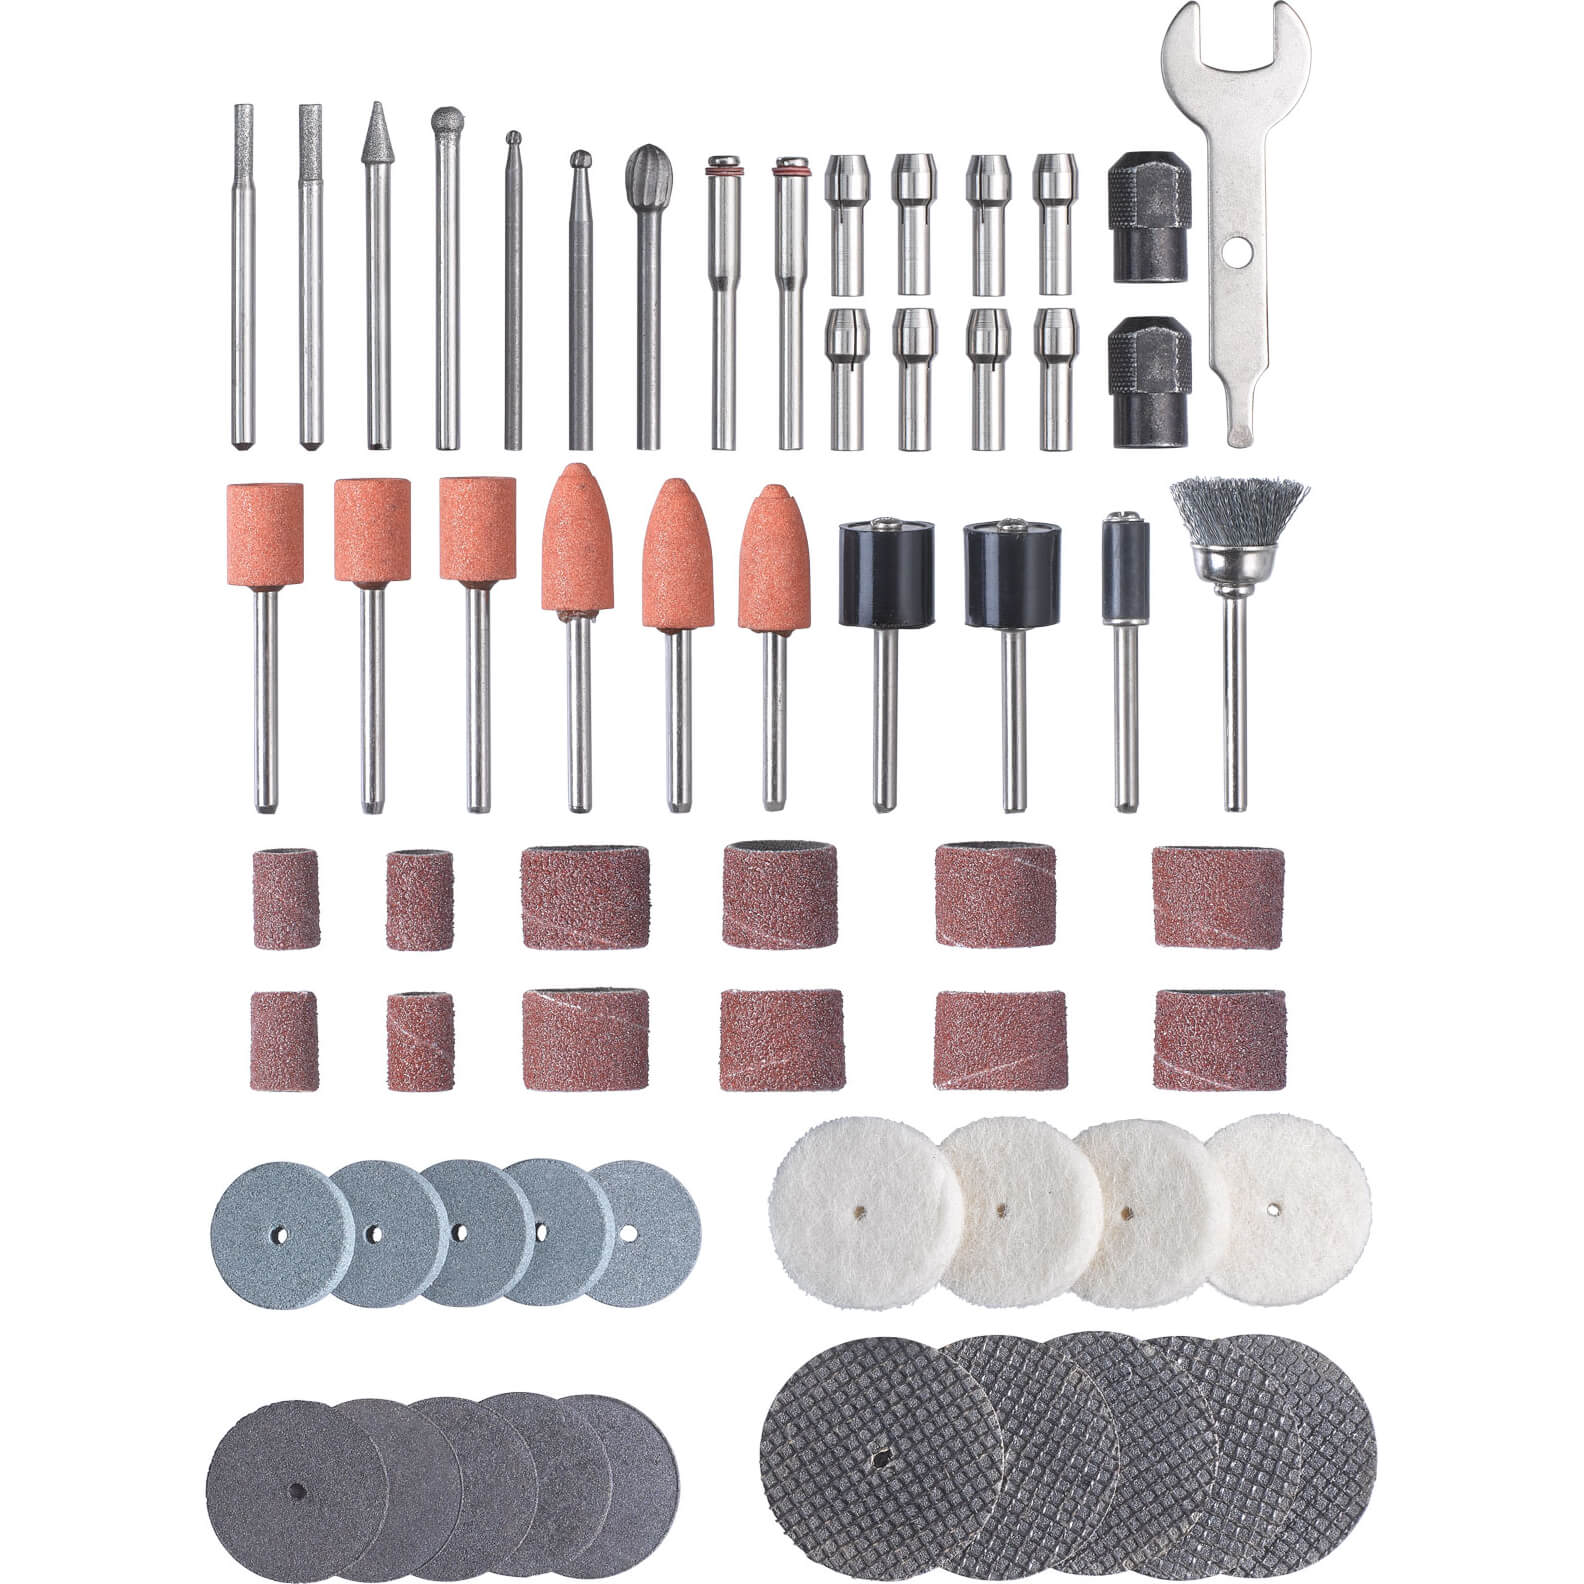 Image of Einhell 61 Piece Rotary Multi Tool Accessory Set